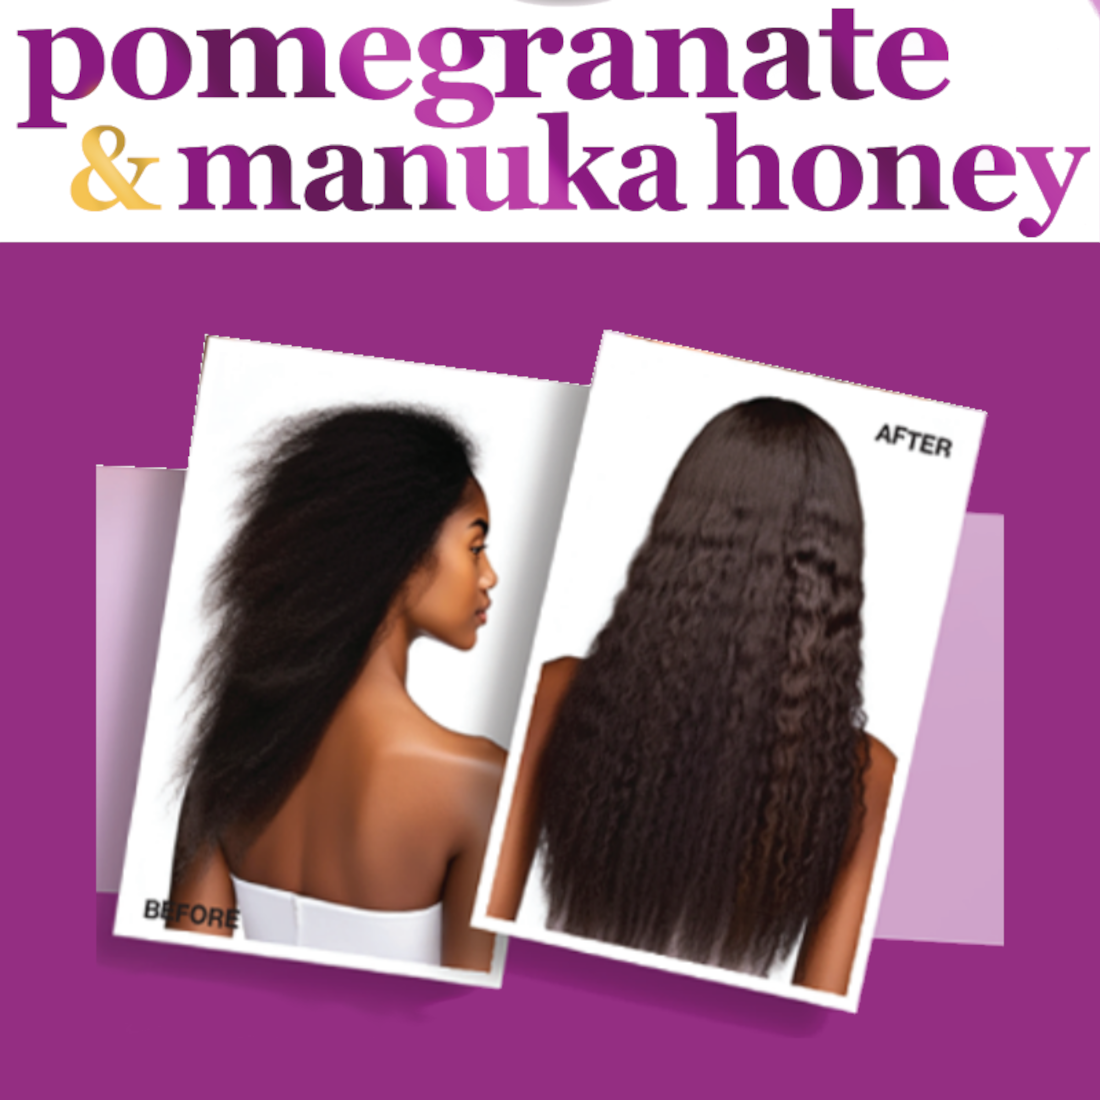 Difeel Pomegranate & Manuka Honey Shampoo & Conditioner 4-PC Set - Includes 33.8oz Shampoo, 33.8oz Conditioner, 8oz Leave in Spray and 7.1oz Hair Oil